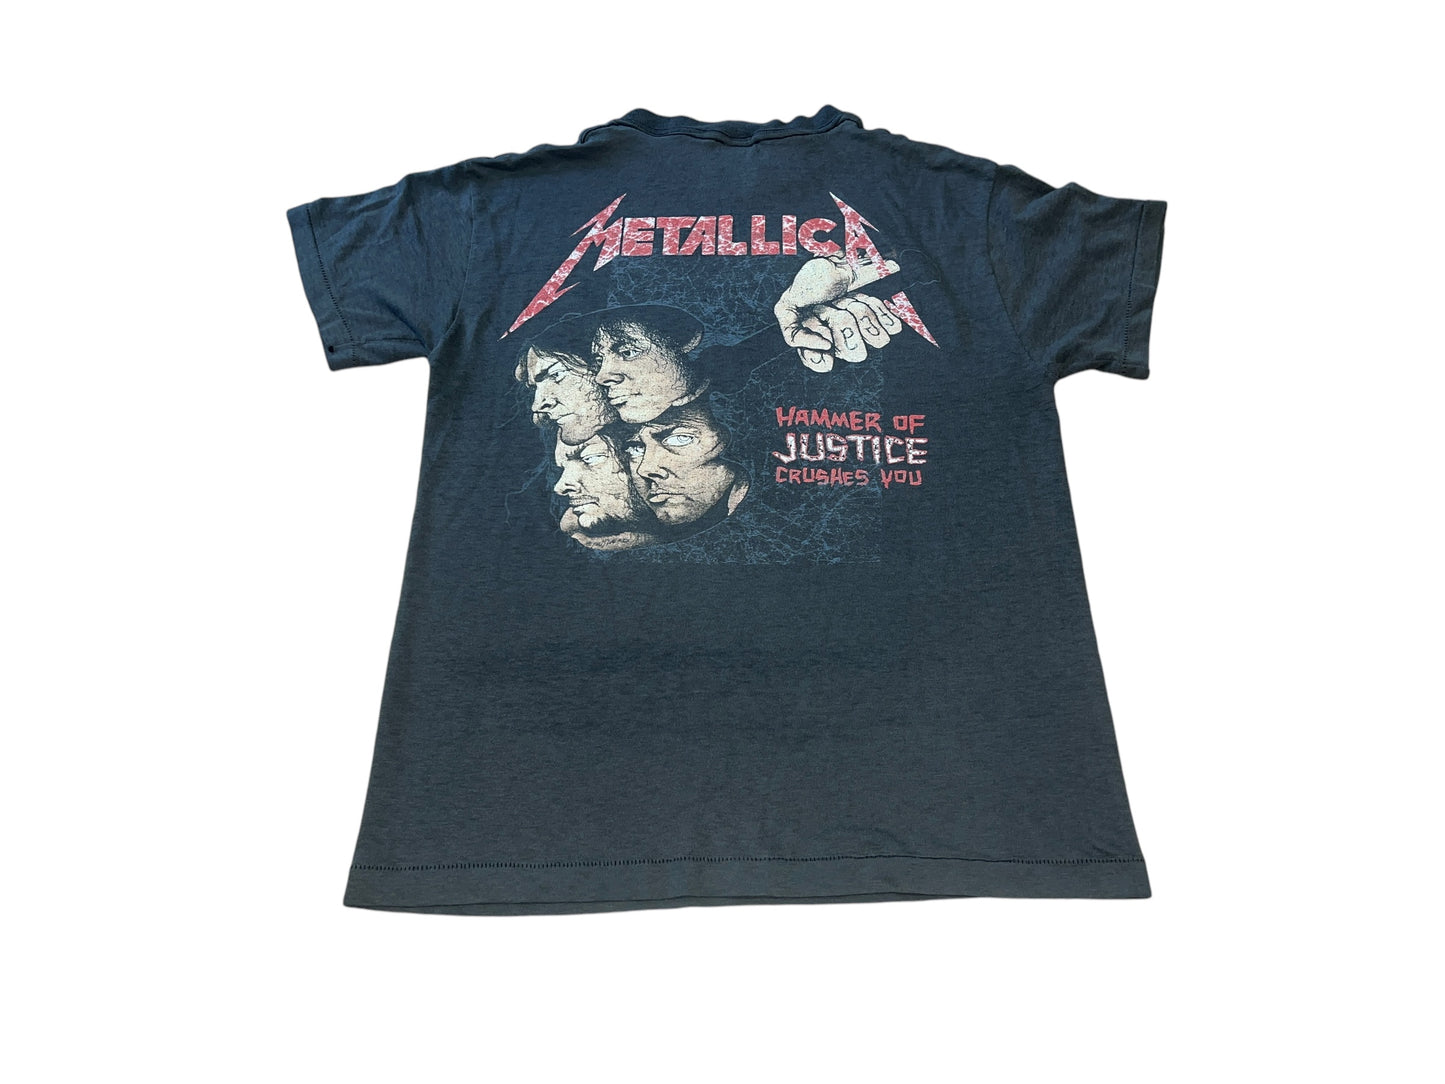 Vintage 80's Metallica T-Shirt